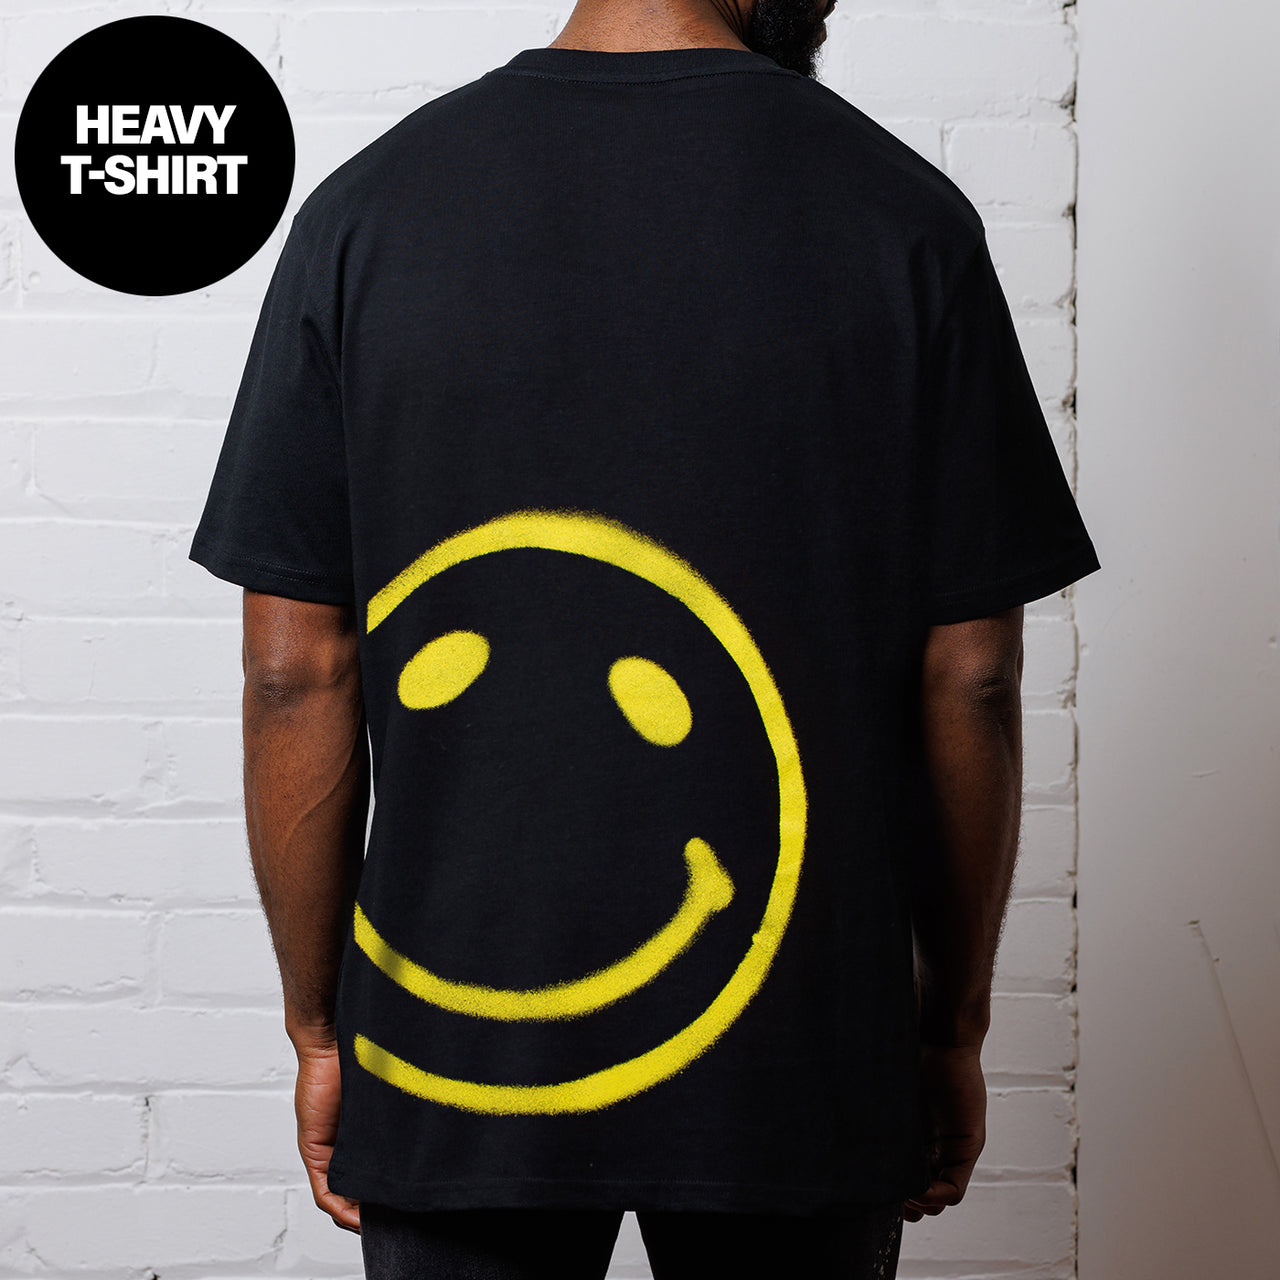 Stencilled Side Smiley Back - Heavy Tshirt - Black